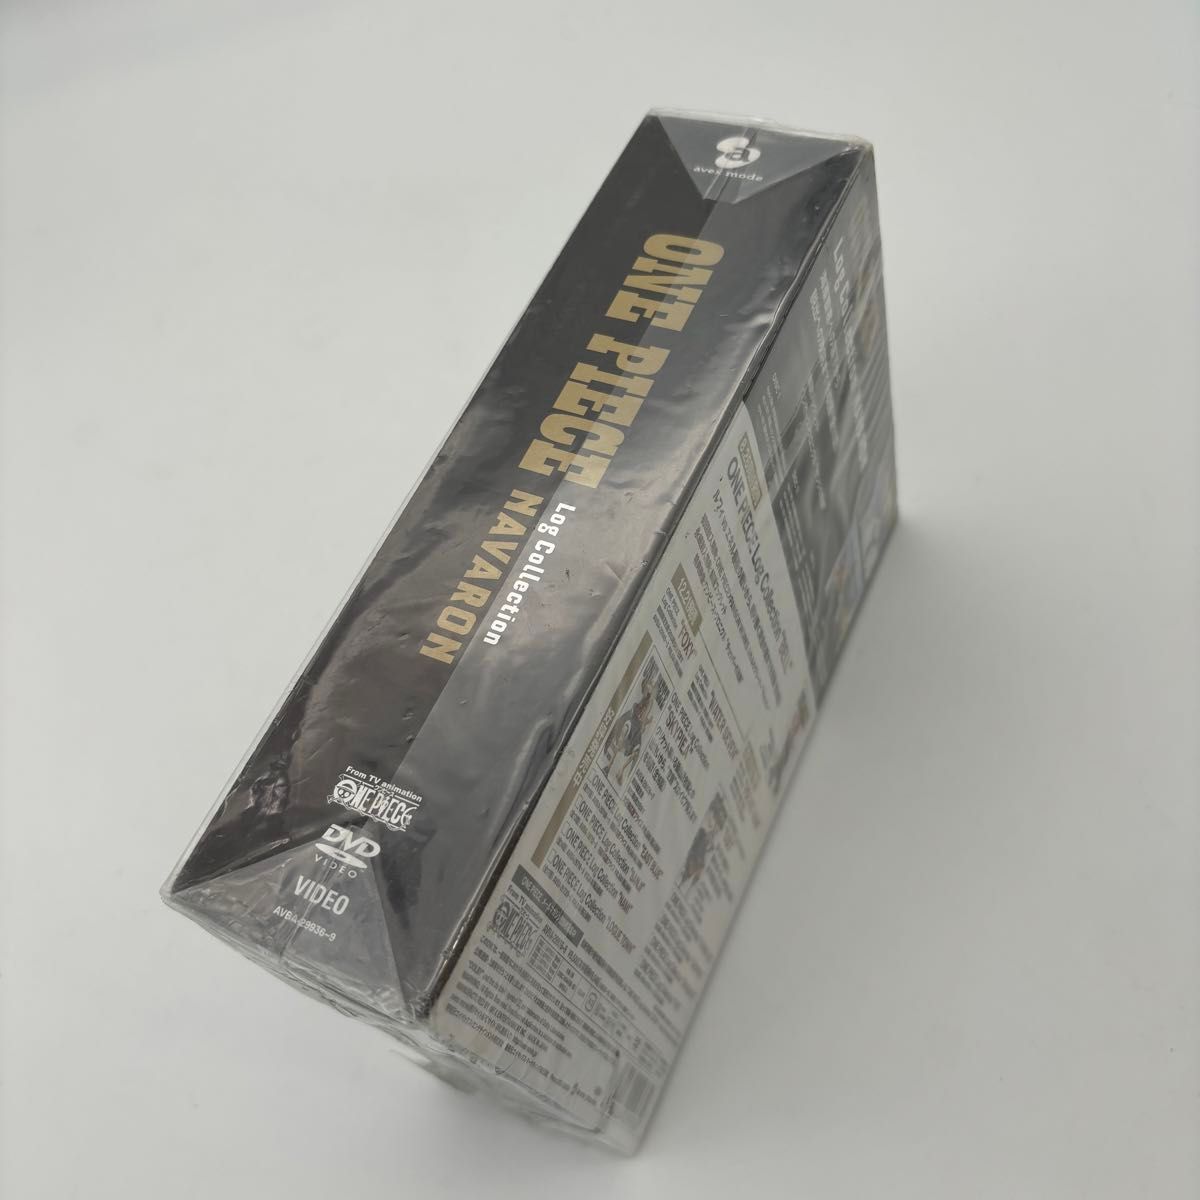 ONE PIECE LOG COLLECTION "NAVARON" [DVD] ワンピース ログコレクション DVD